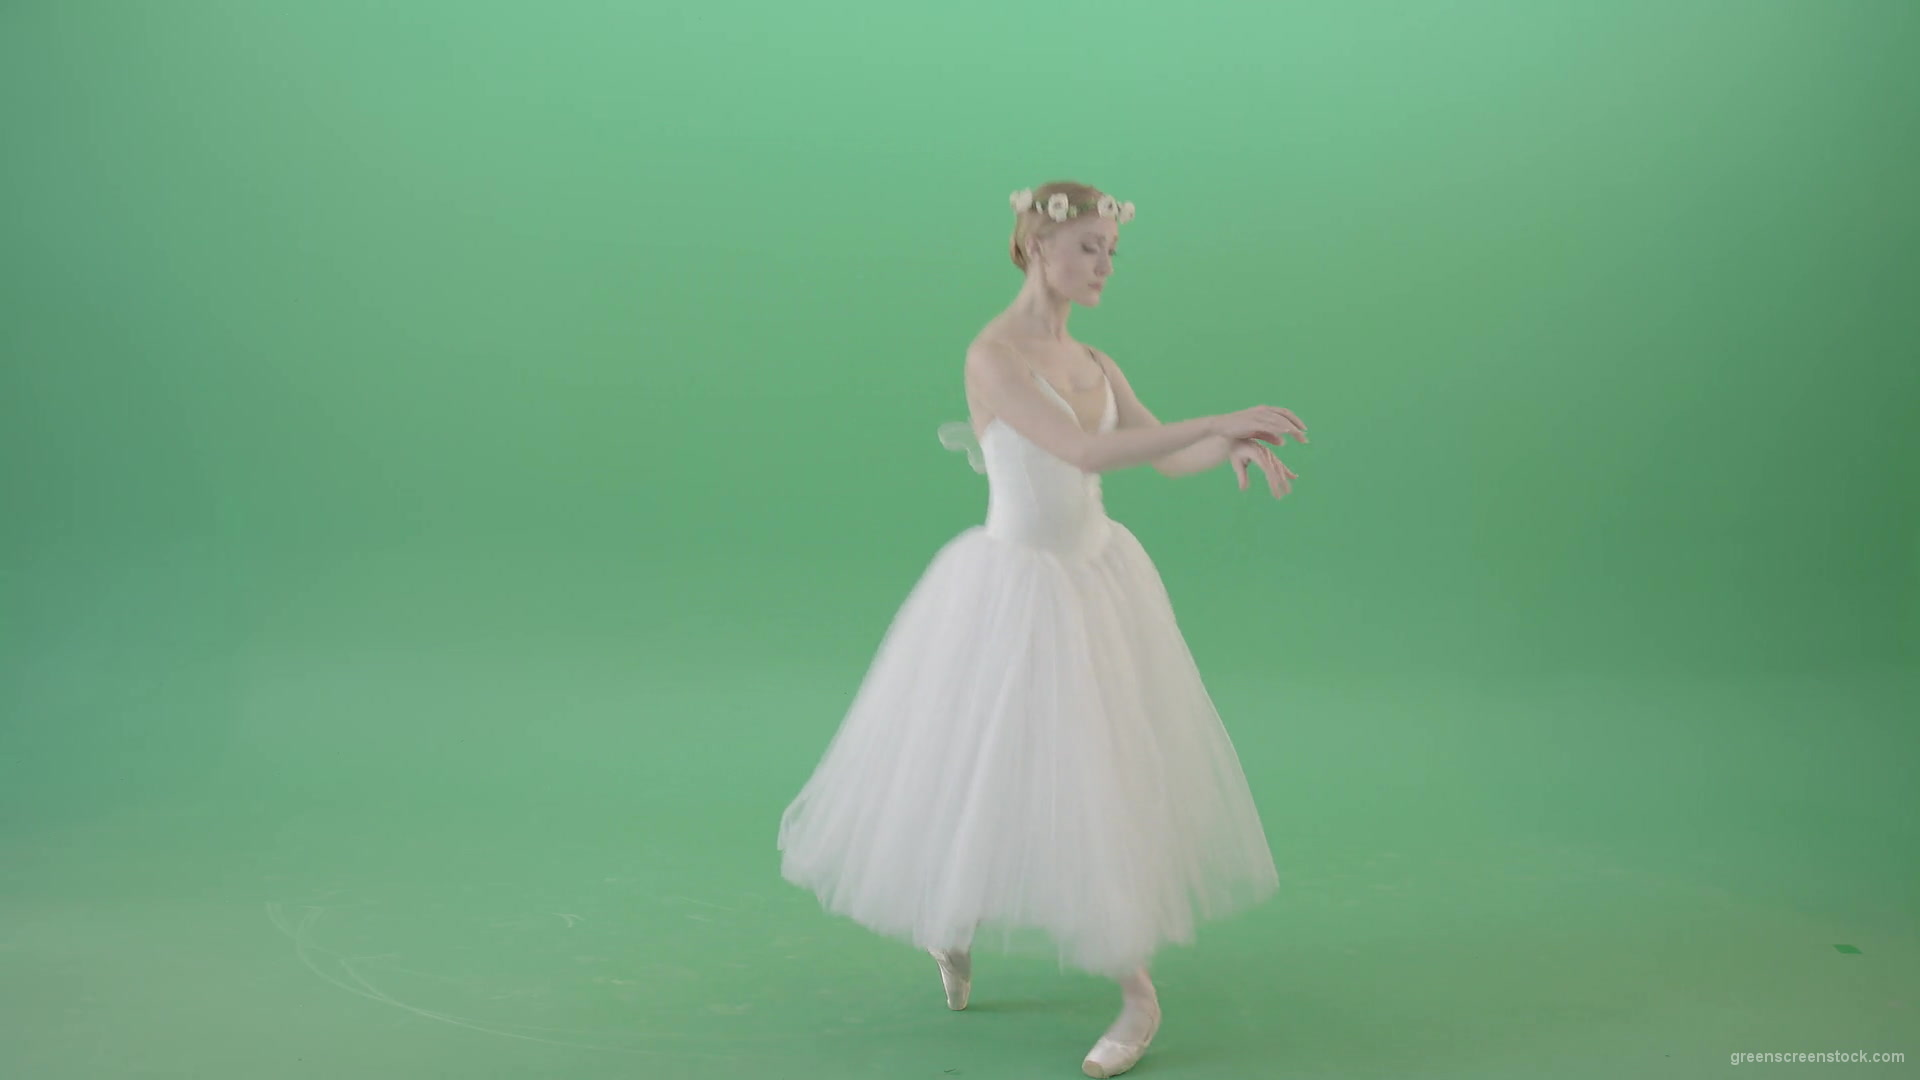 Ballerina-in-elegance-white-wedding-dress-spinning-in-dance-on-green-screen-4K-Video-Footage-1920_008 Green Screen Stock